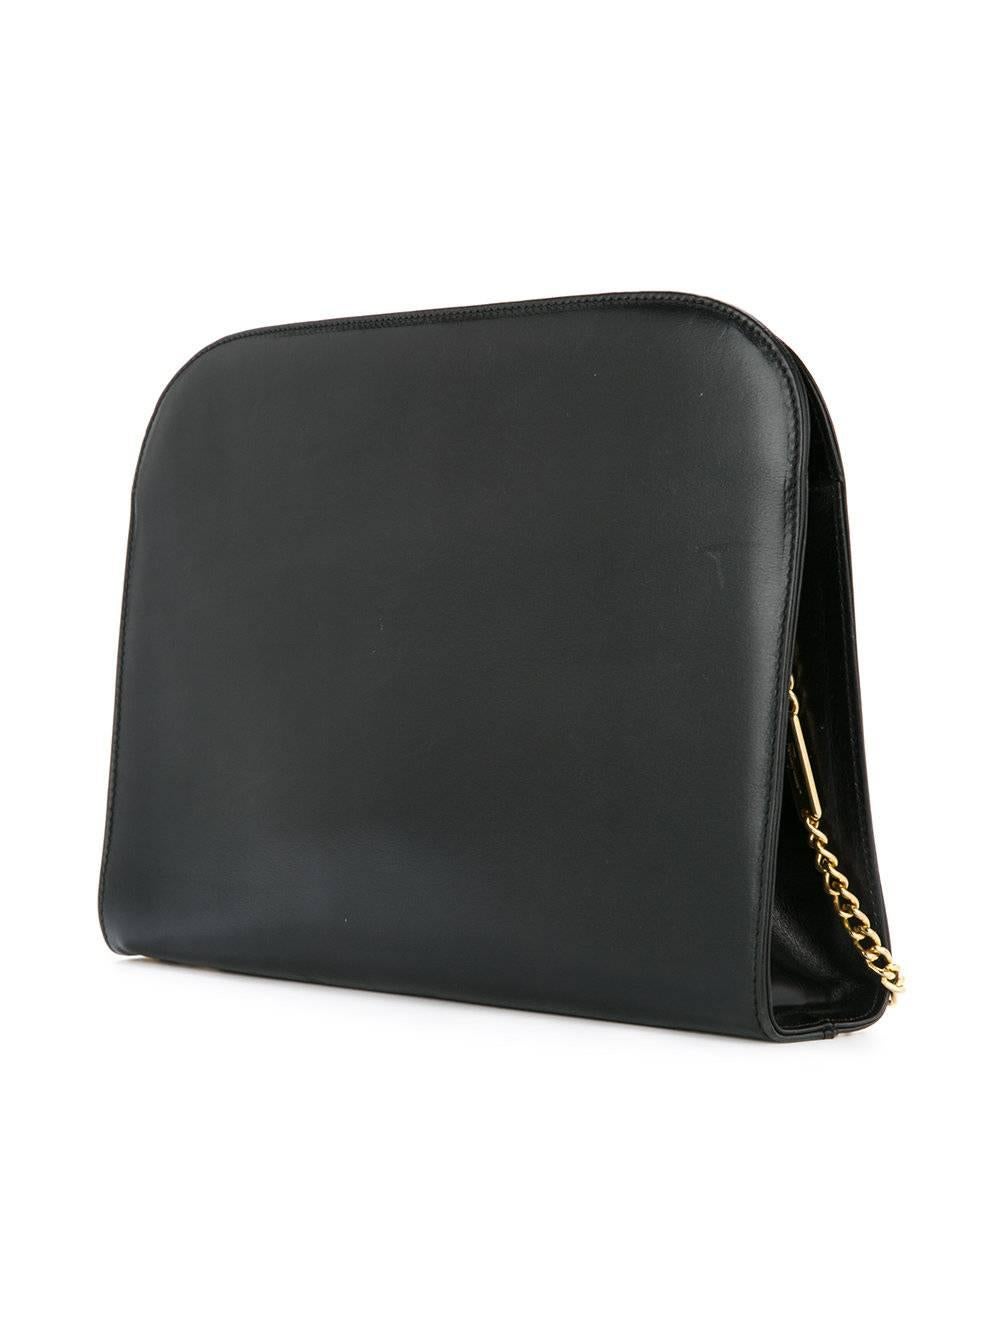 Women's Salvatore Ferragamo Black Leather Envelope 2 in 1 Clutch Flap Shoulder Bag